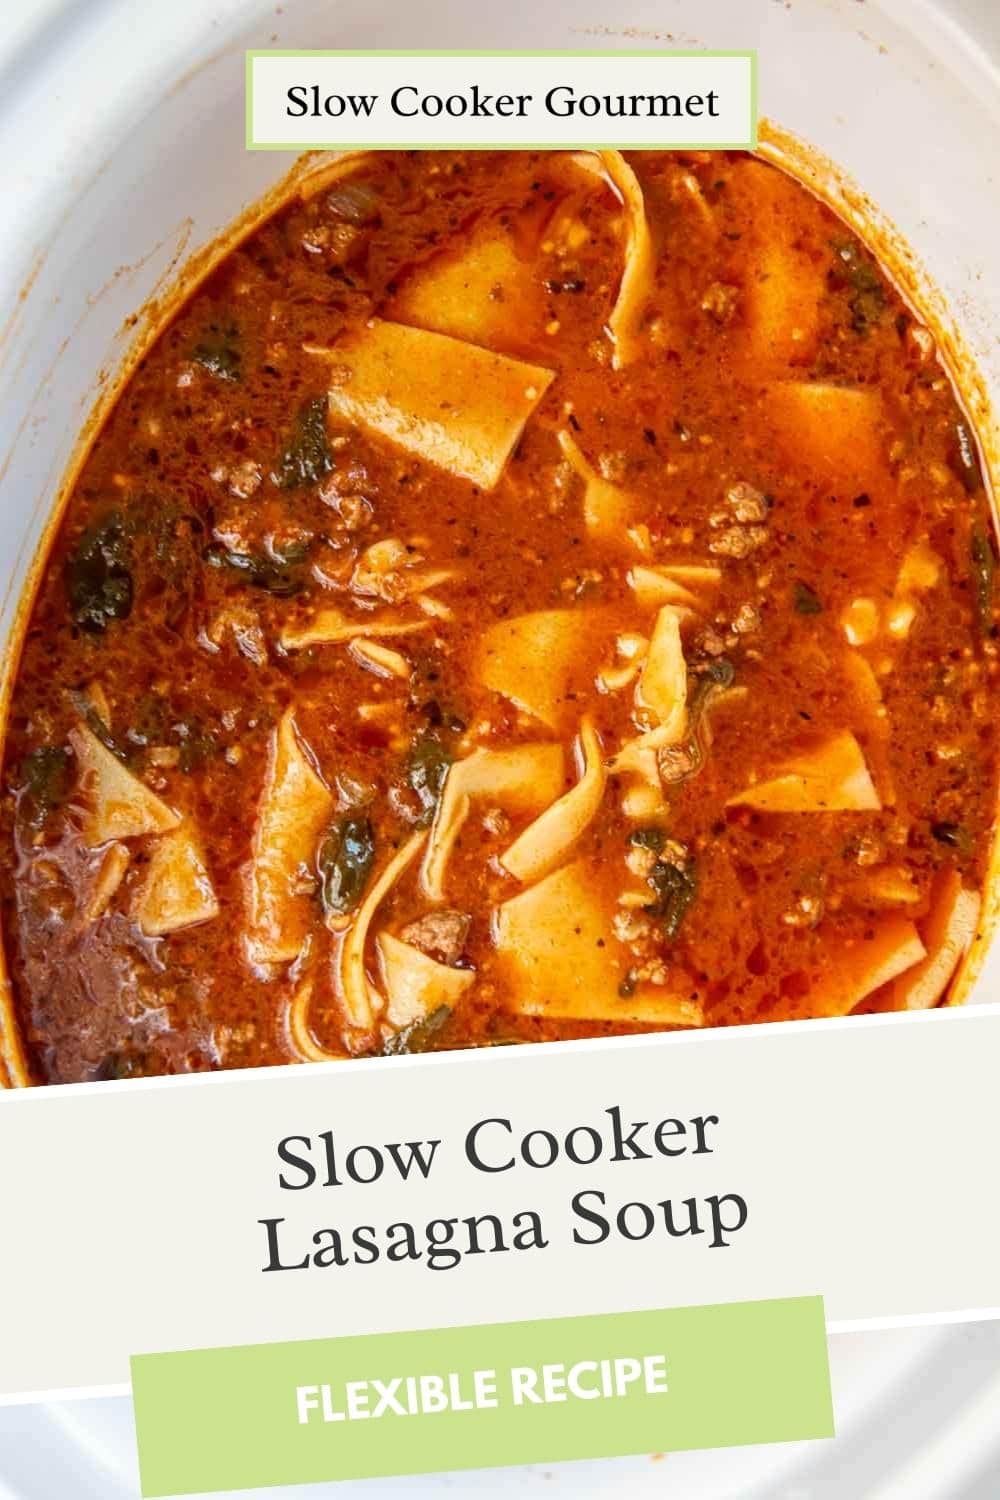 Slow Cooker Lasagna Soup - Slow Cooker Gourmet